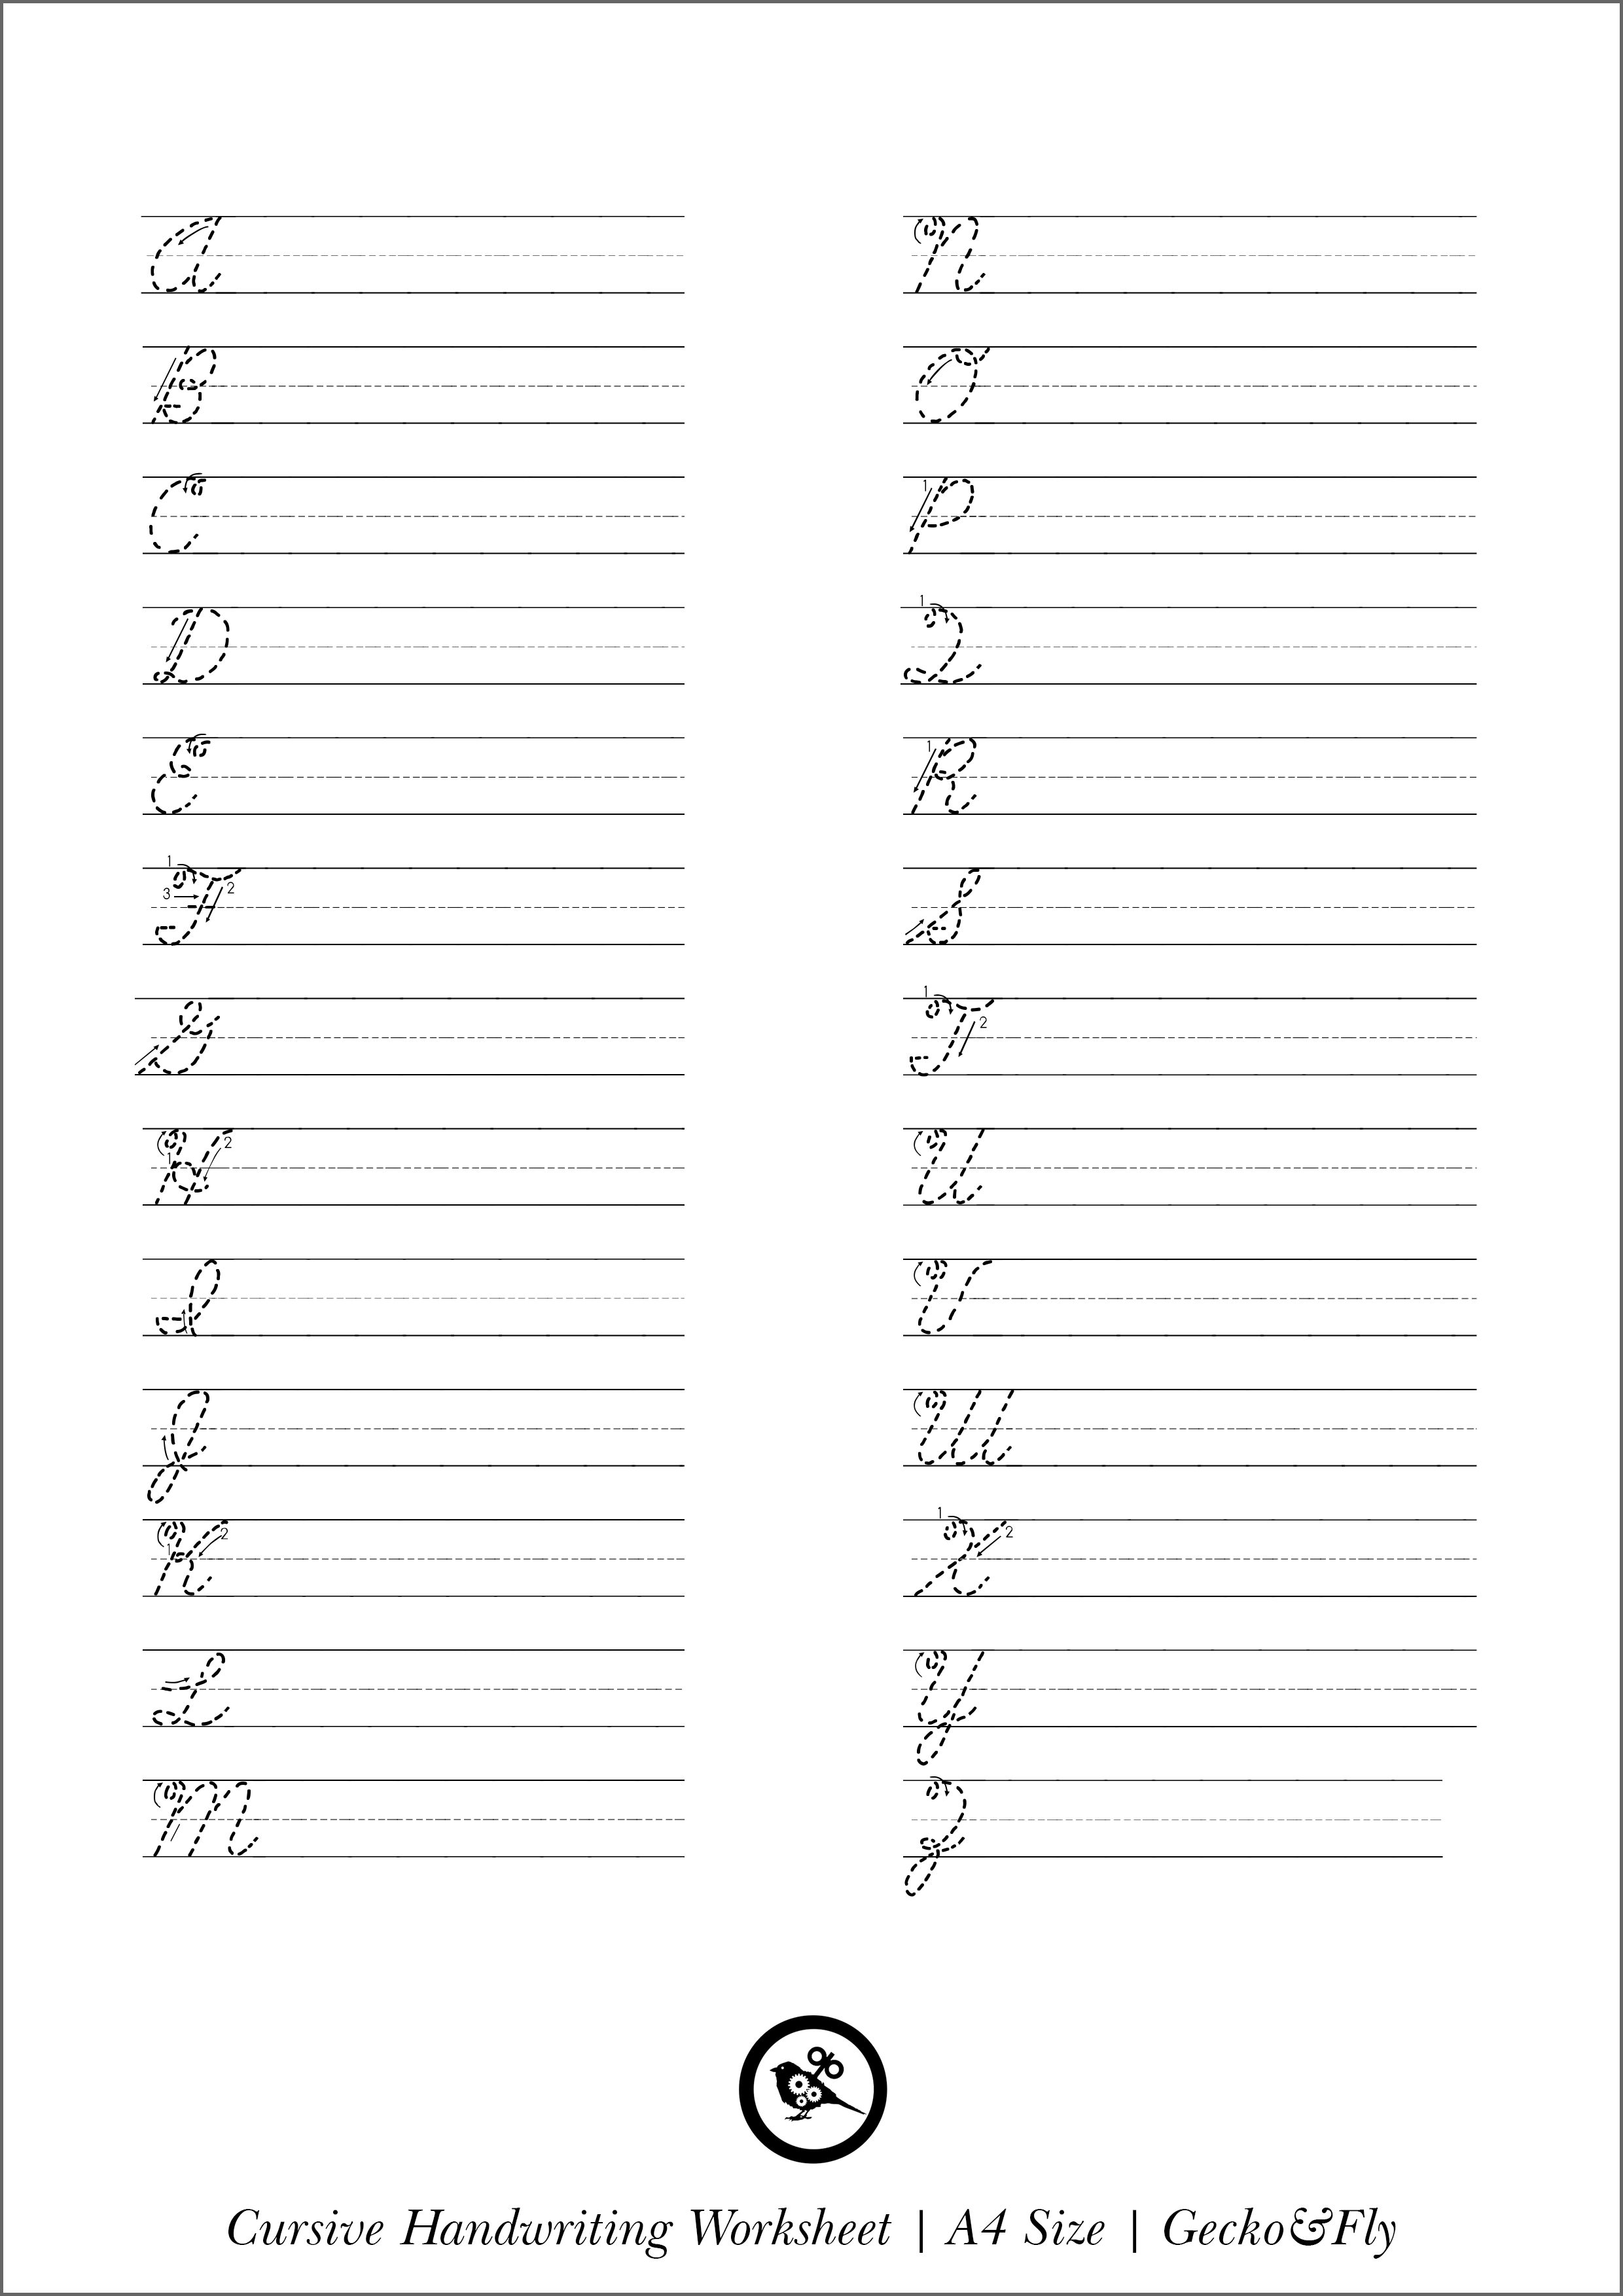 cursive-handwriting-worksheet